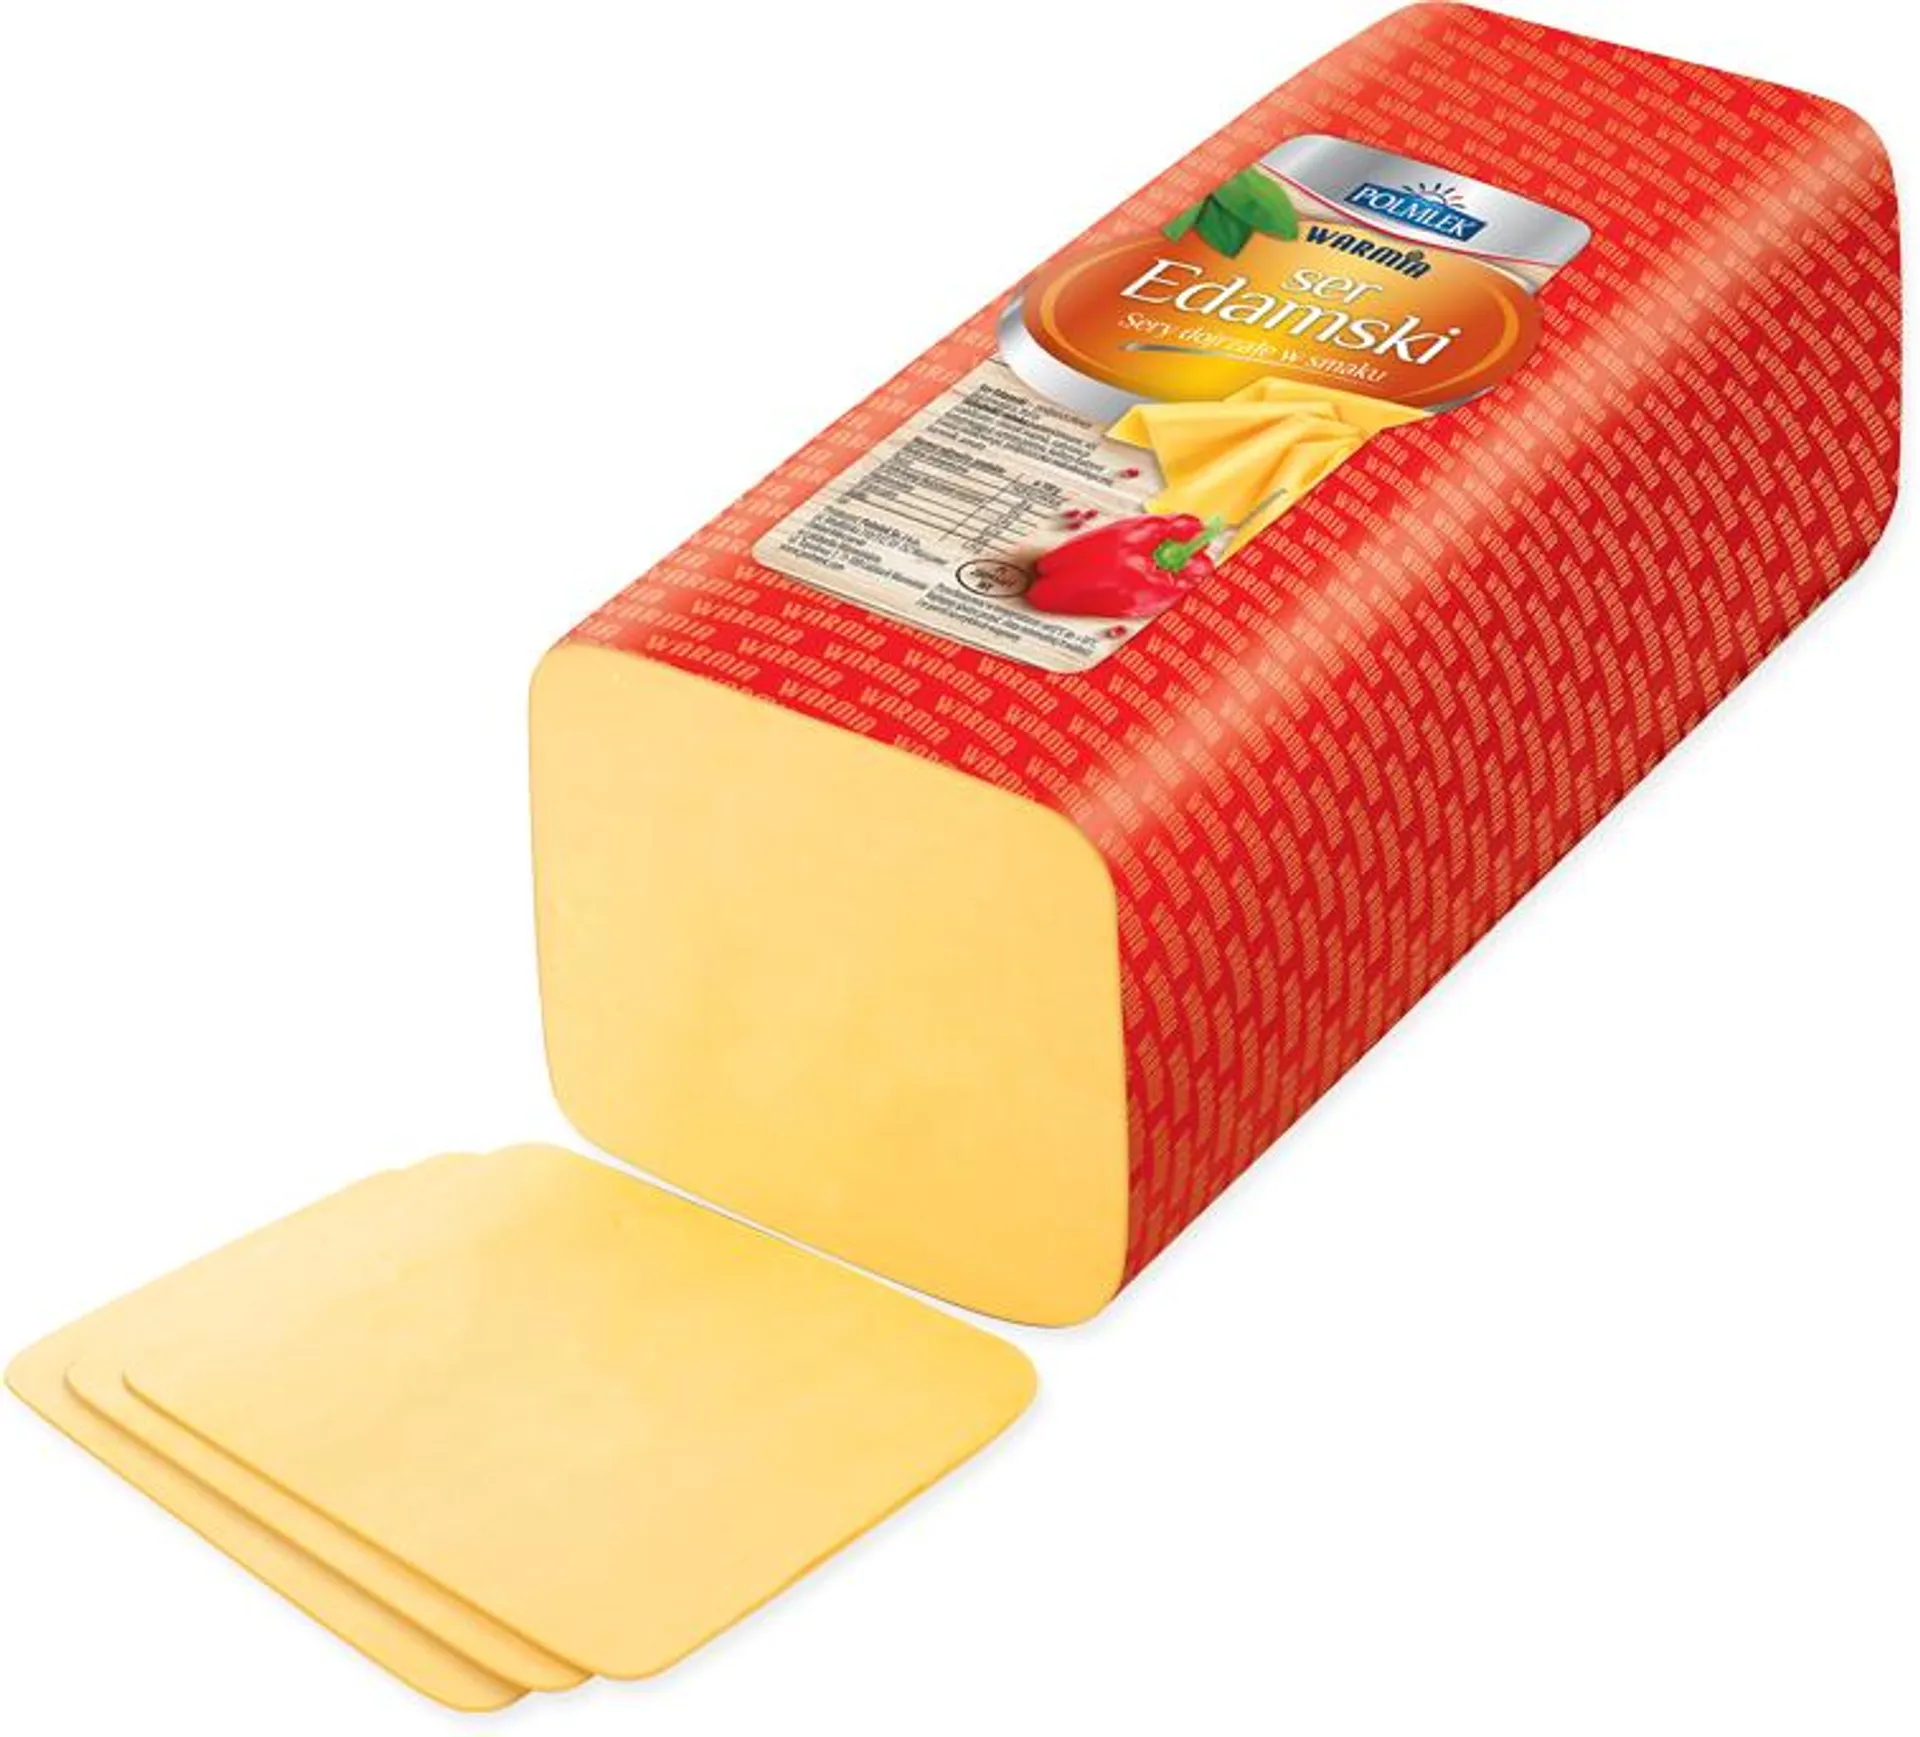 Cheese Edamski 100g (Sliced)